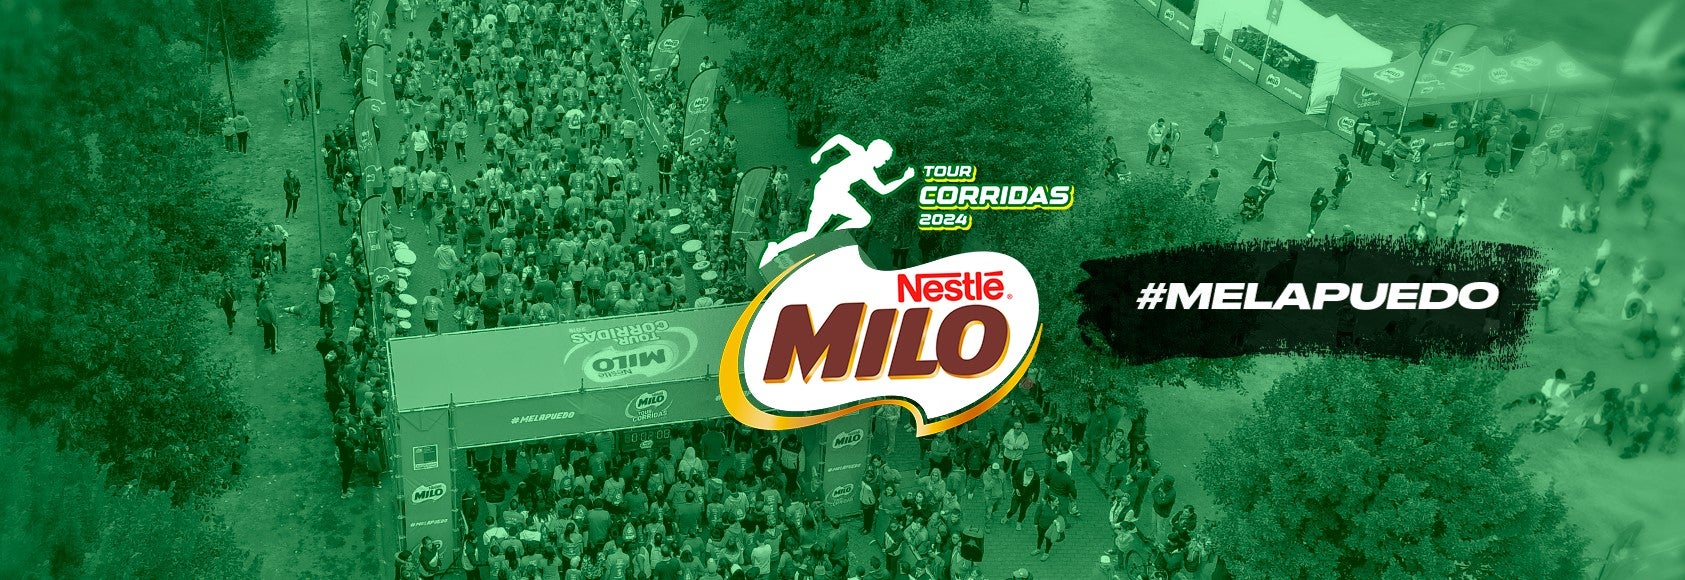 Banner-corridas-milo-web.jpg 